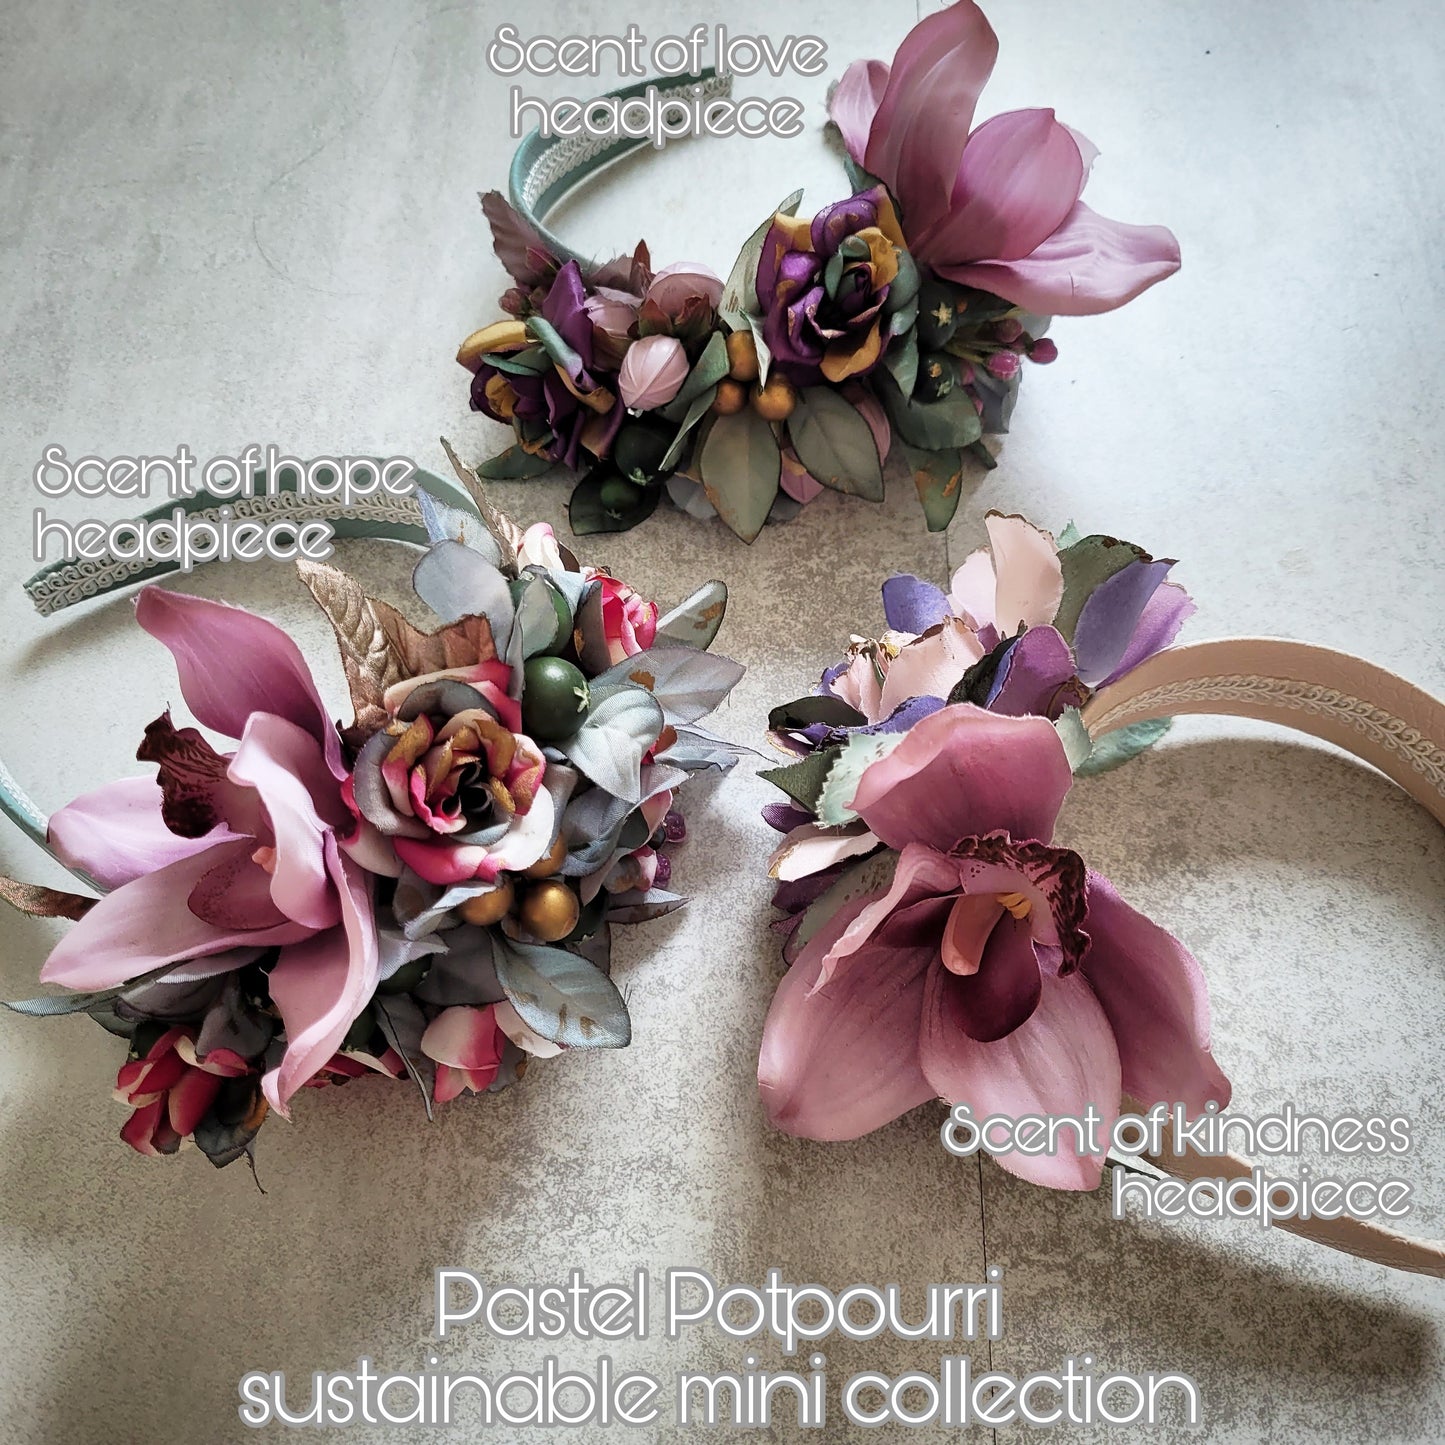 Pastel Potpurri sustainable (bridal) mini collection: Scent of Hope flower headpiece